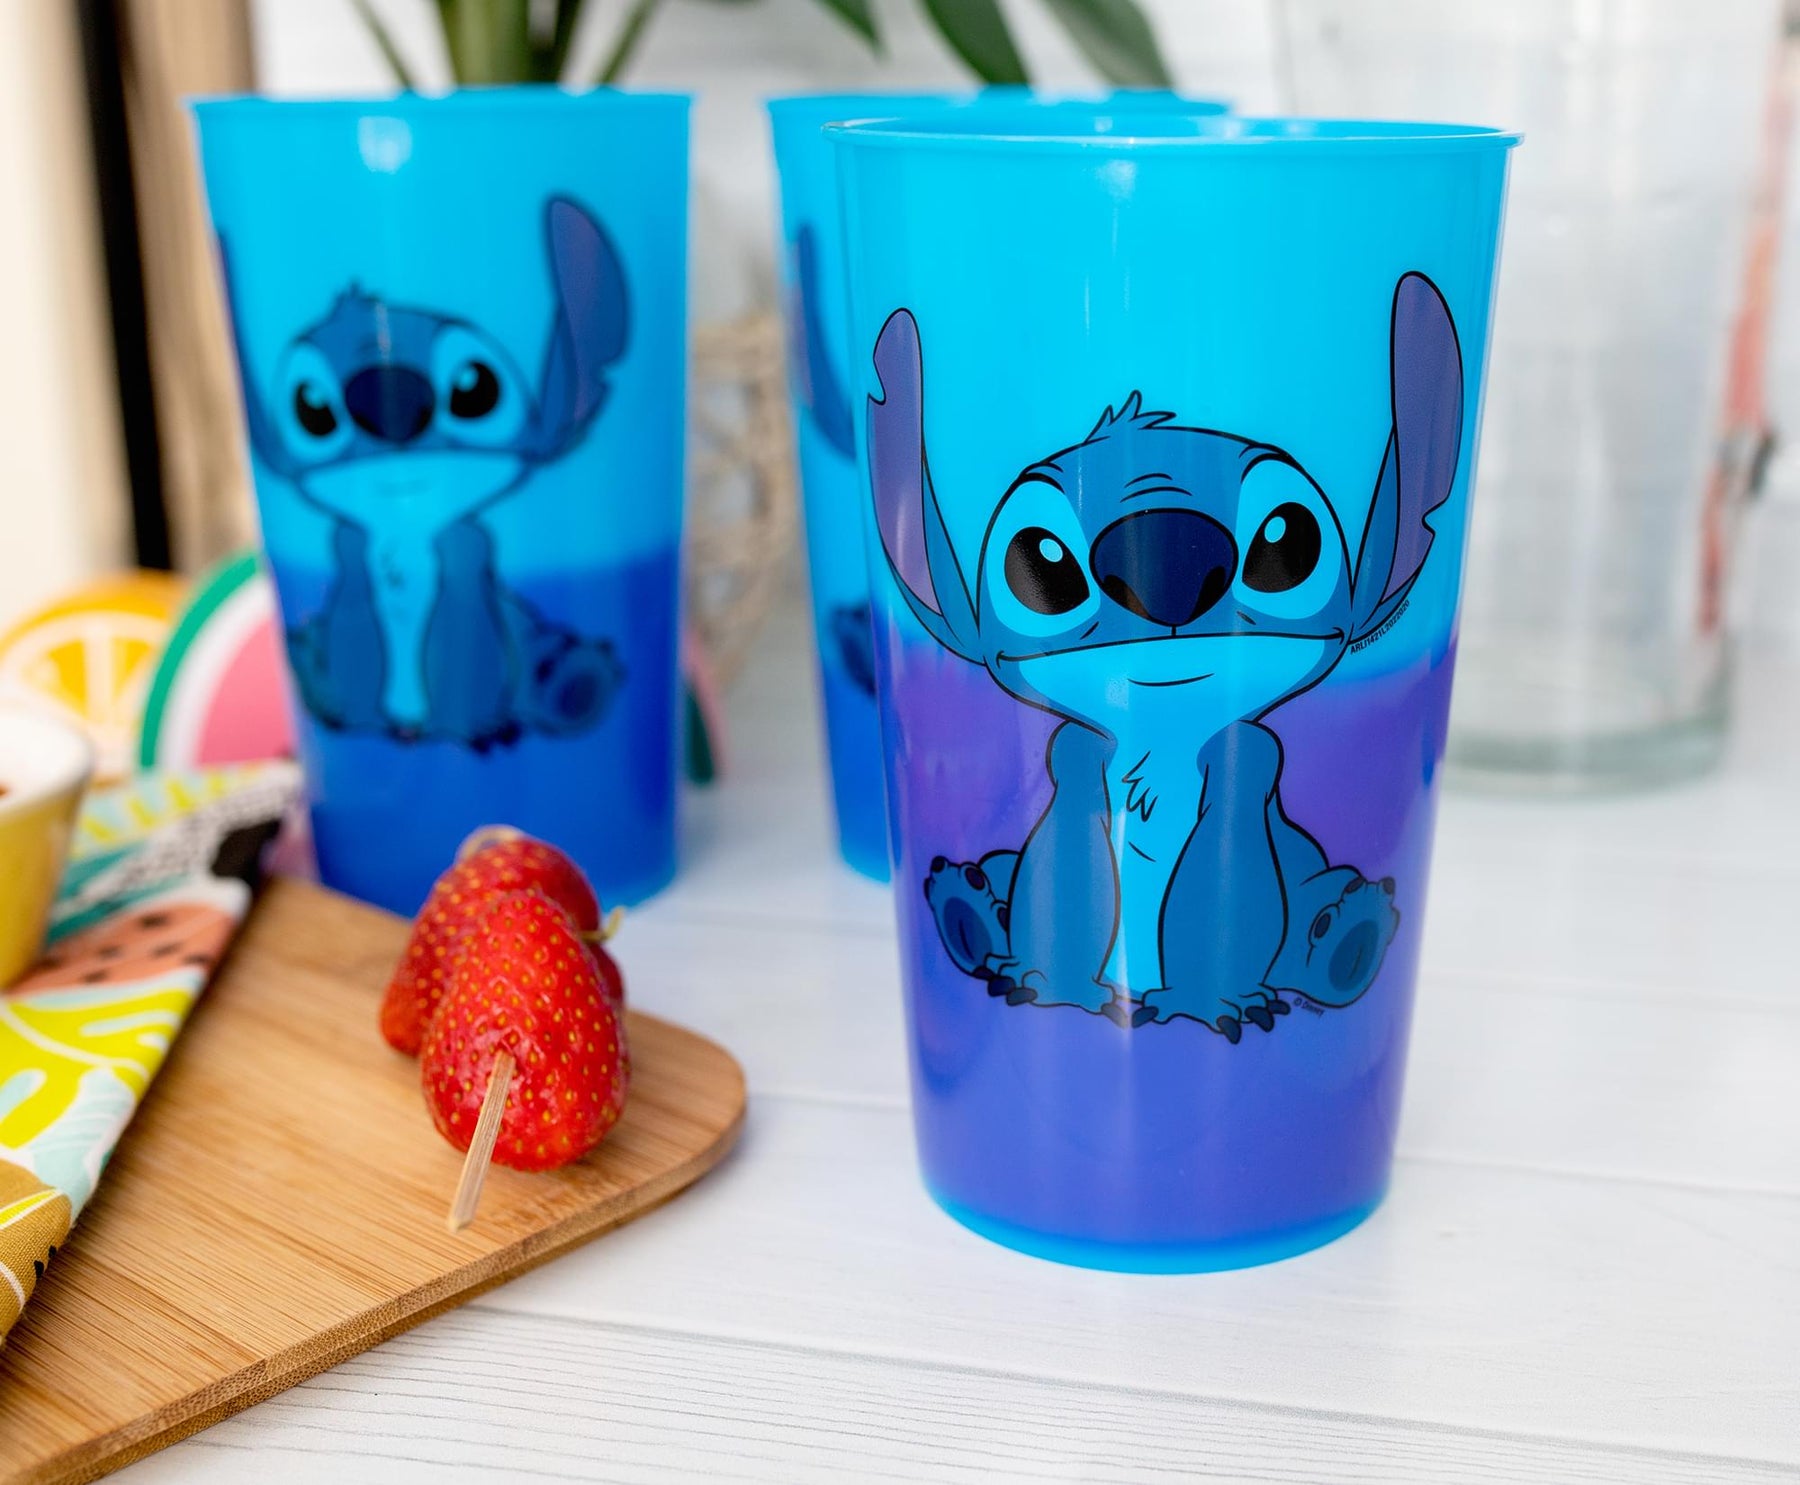 Disney Lilo & Stitch Color-Changing Plastic Cups | Set of 4